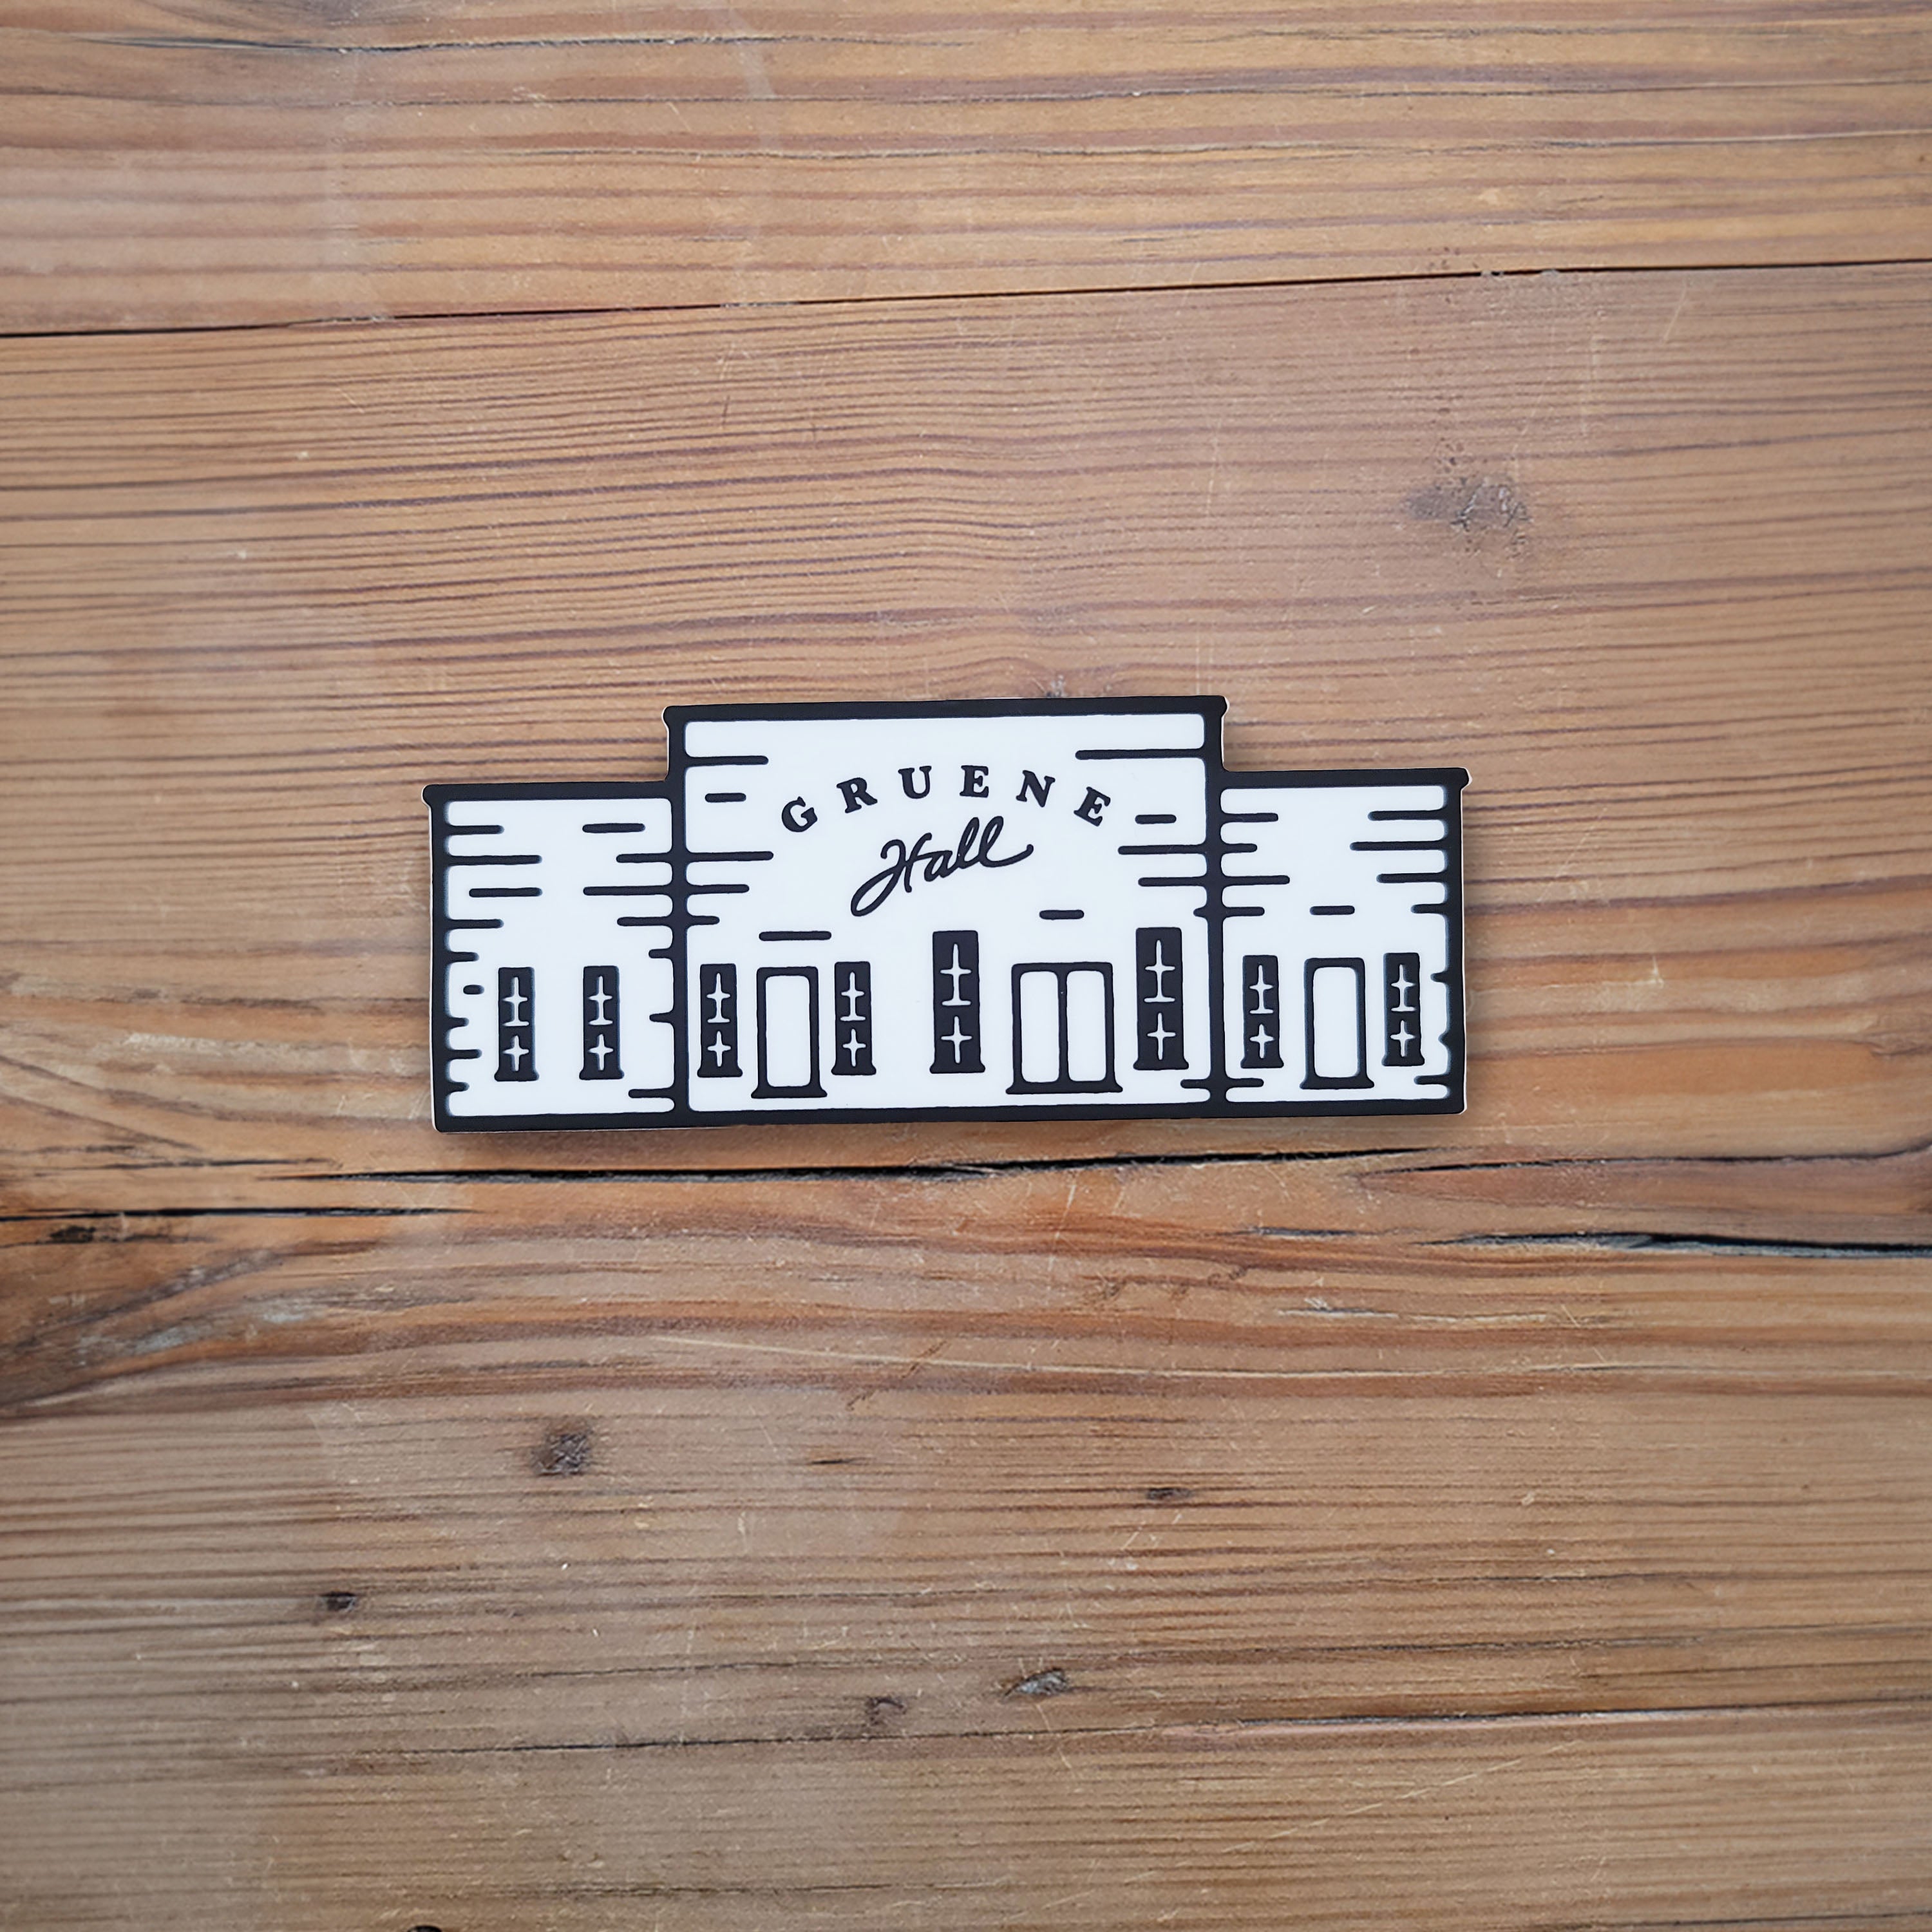 Gruene Hall Standard Building Sketch Sticker